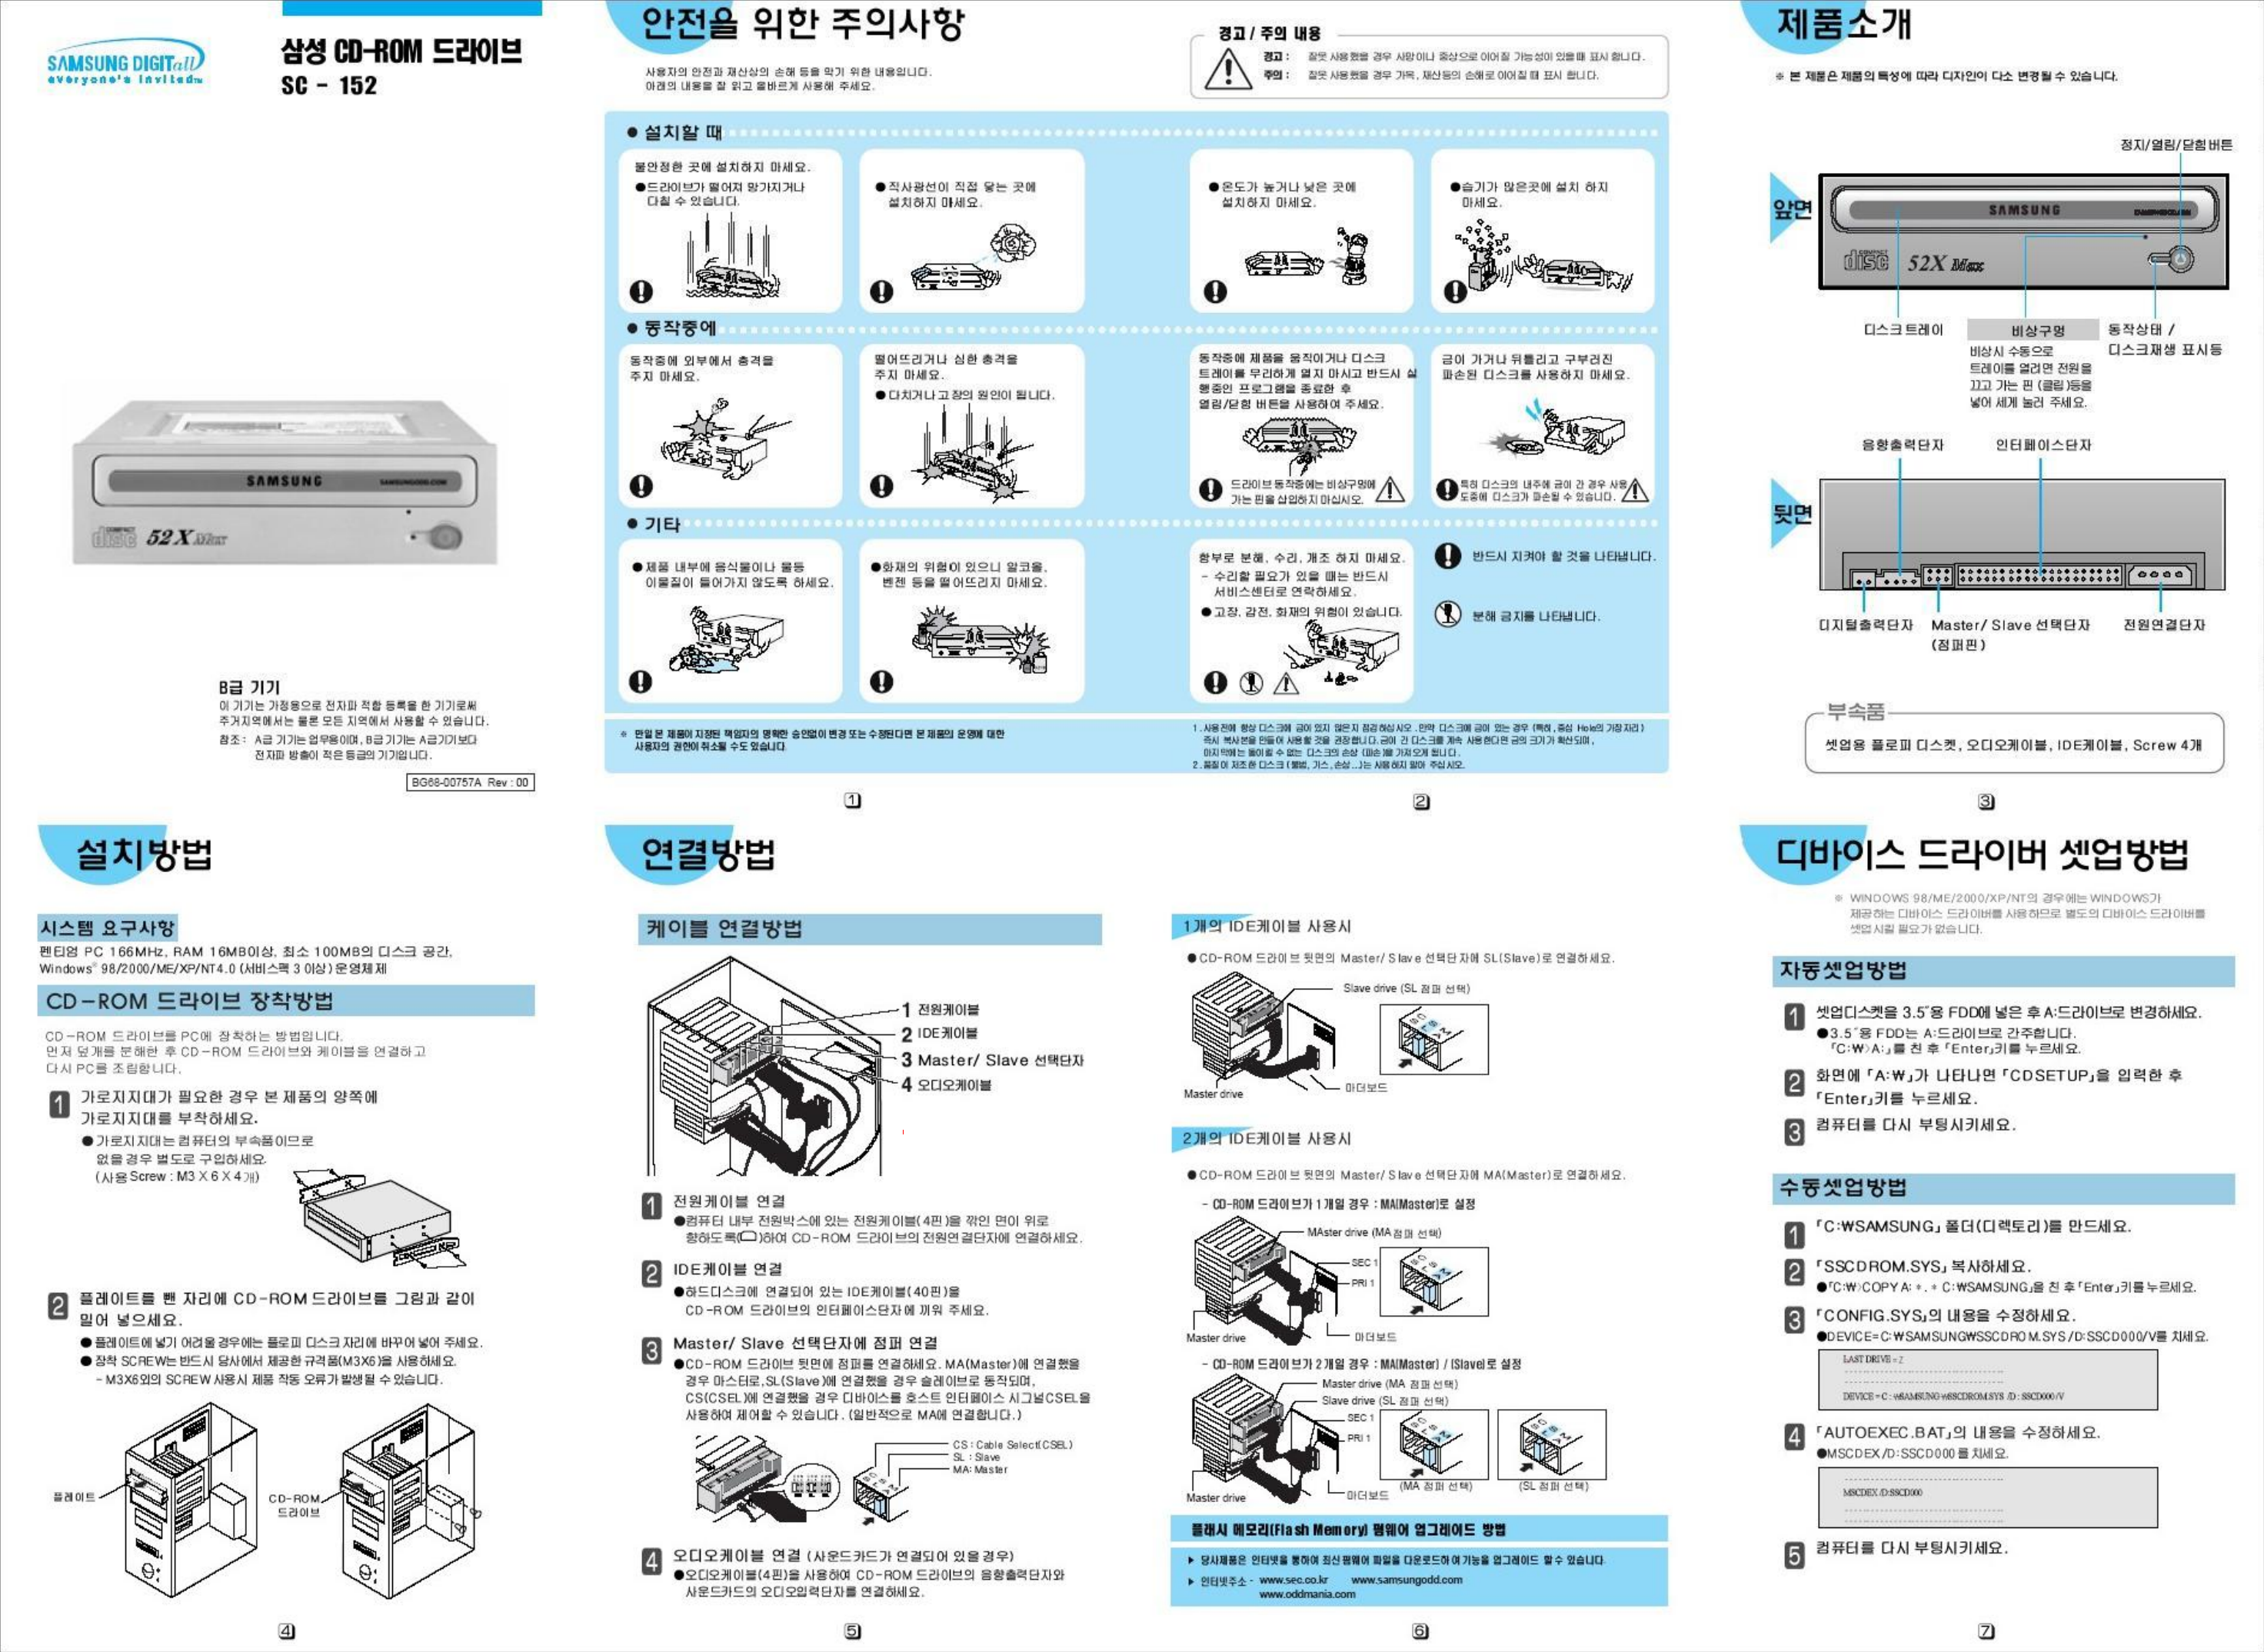 Page 1 of 2 - Samsung SC-152G_BG68-00757A-00_KO SC-152G 20050922131244984 K-User